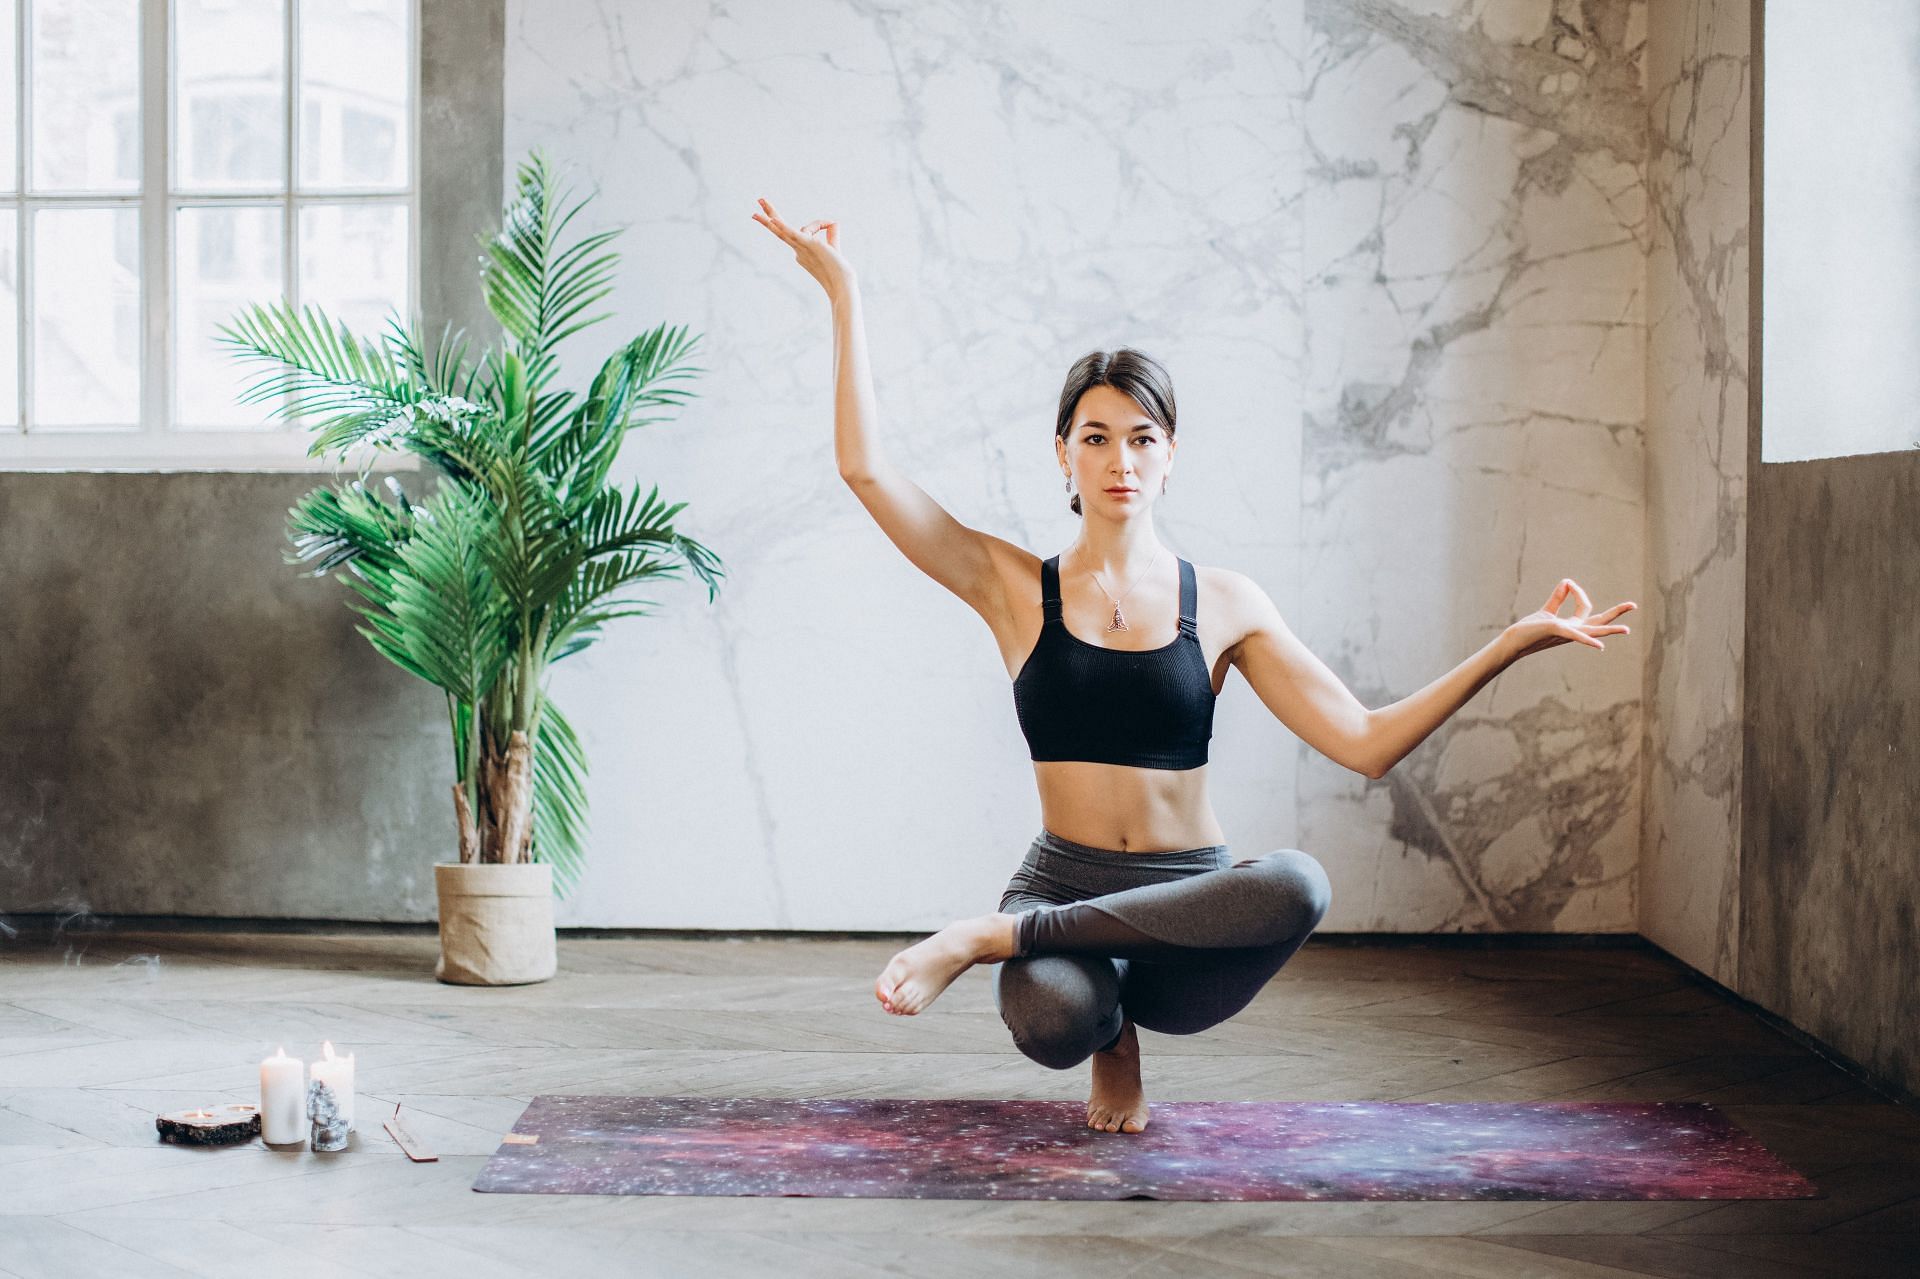 Foundational Yoga Postures to Get You Began